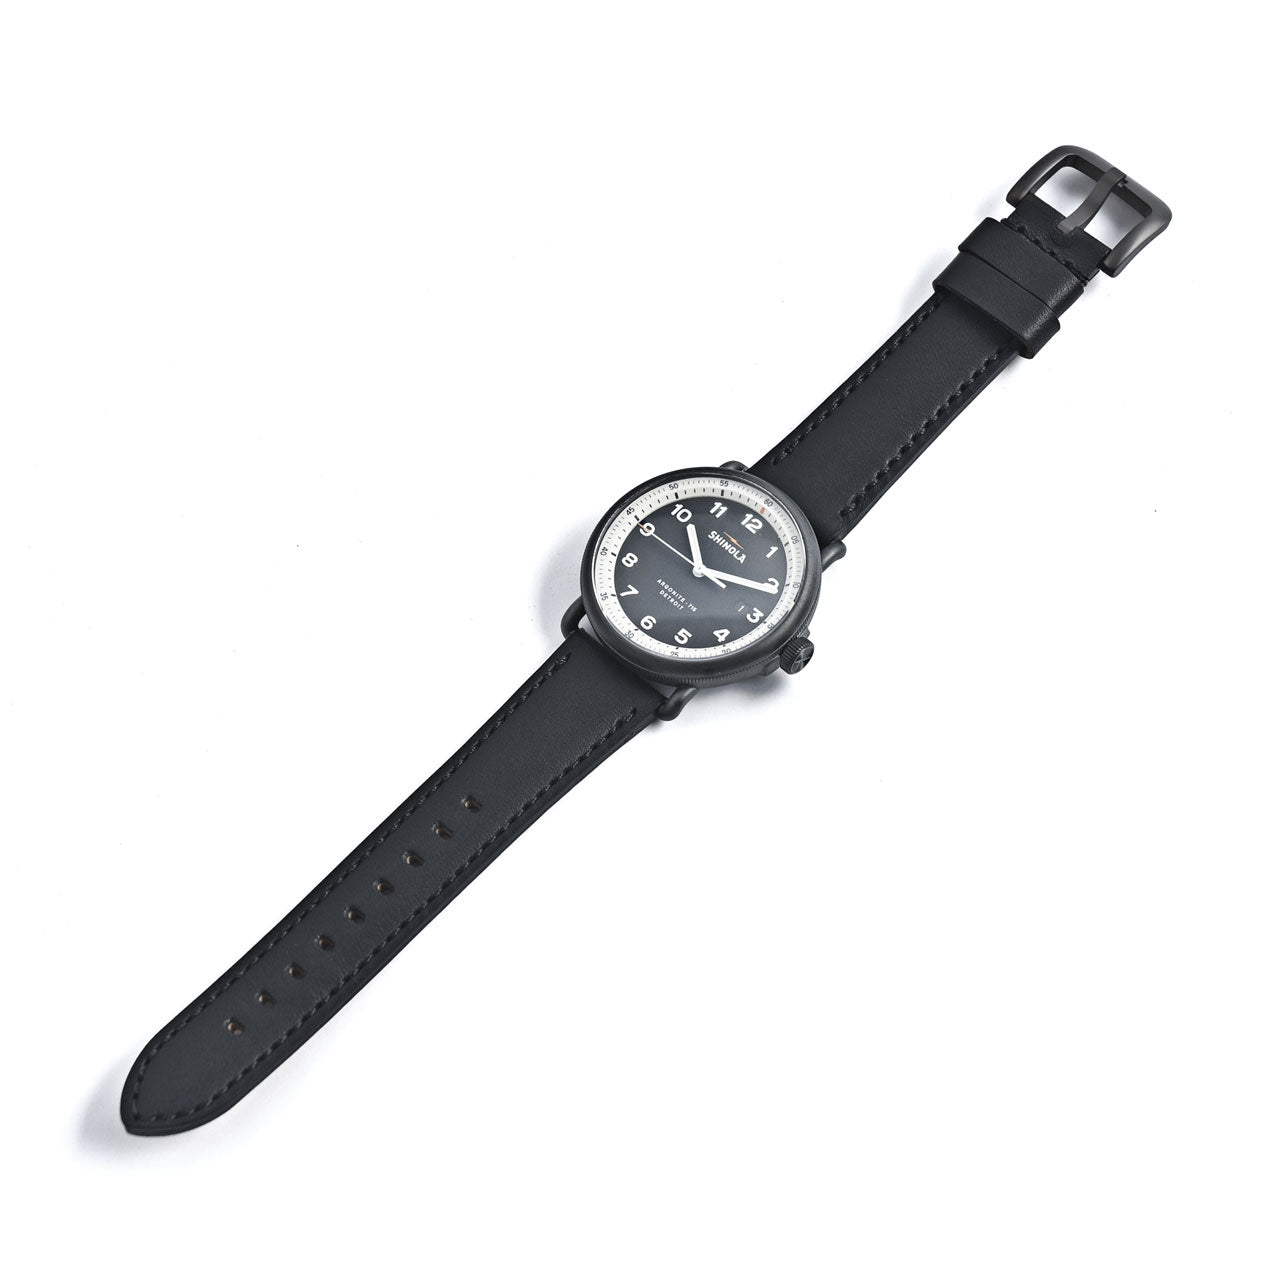 Shinola Canfield Model C56 Watch